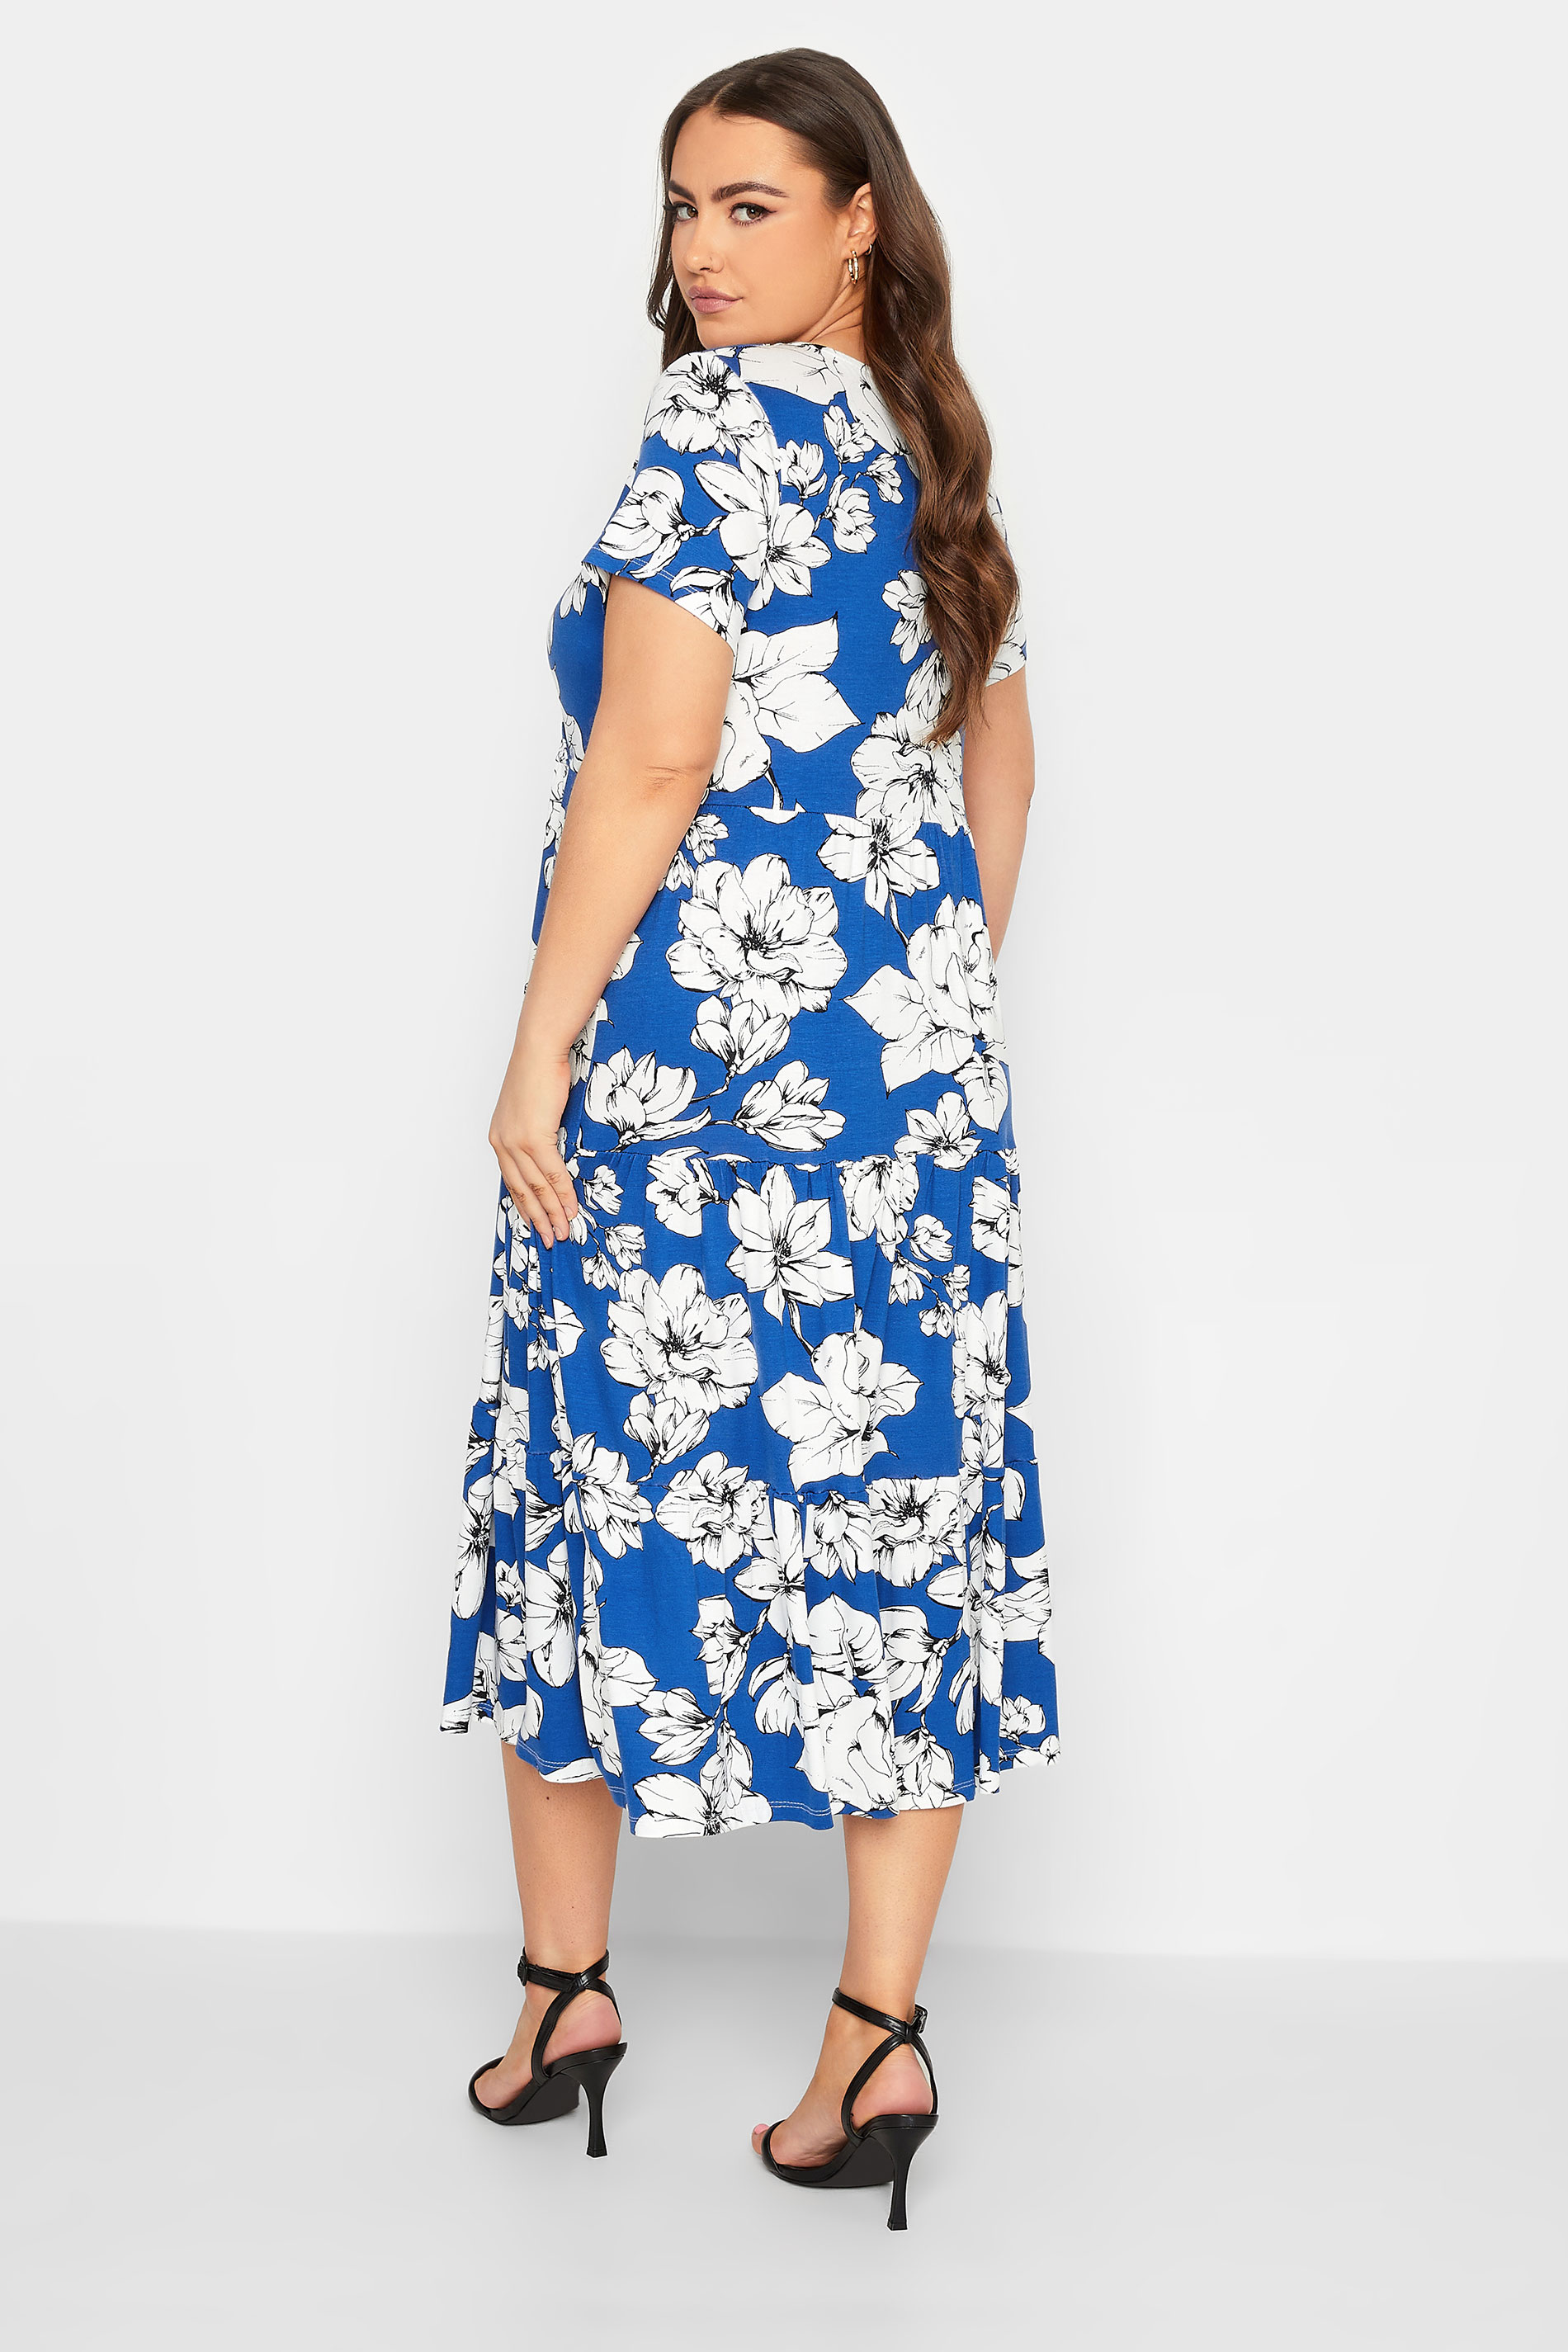 YOURS Plus Size Curve Cobalt Blue Floral V-Neck Tiered Wrap Dress | Yours Clothing  3